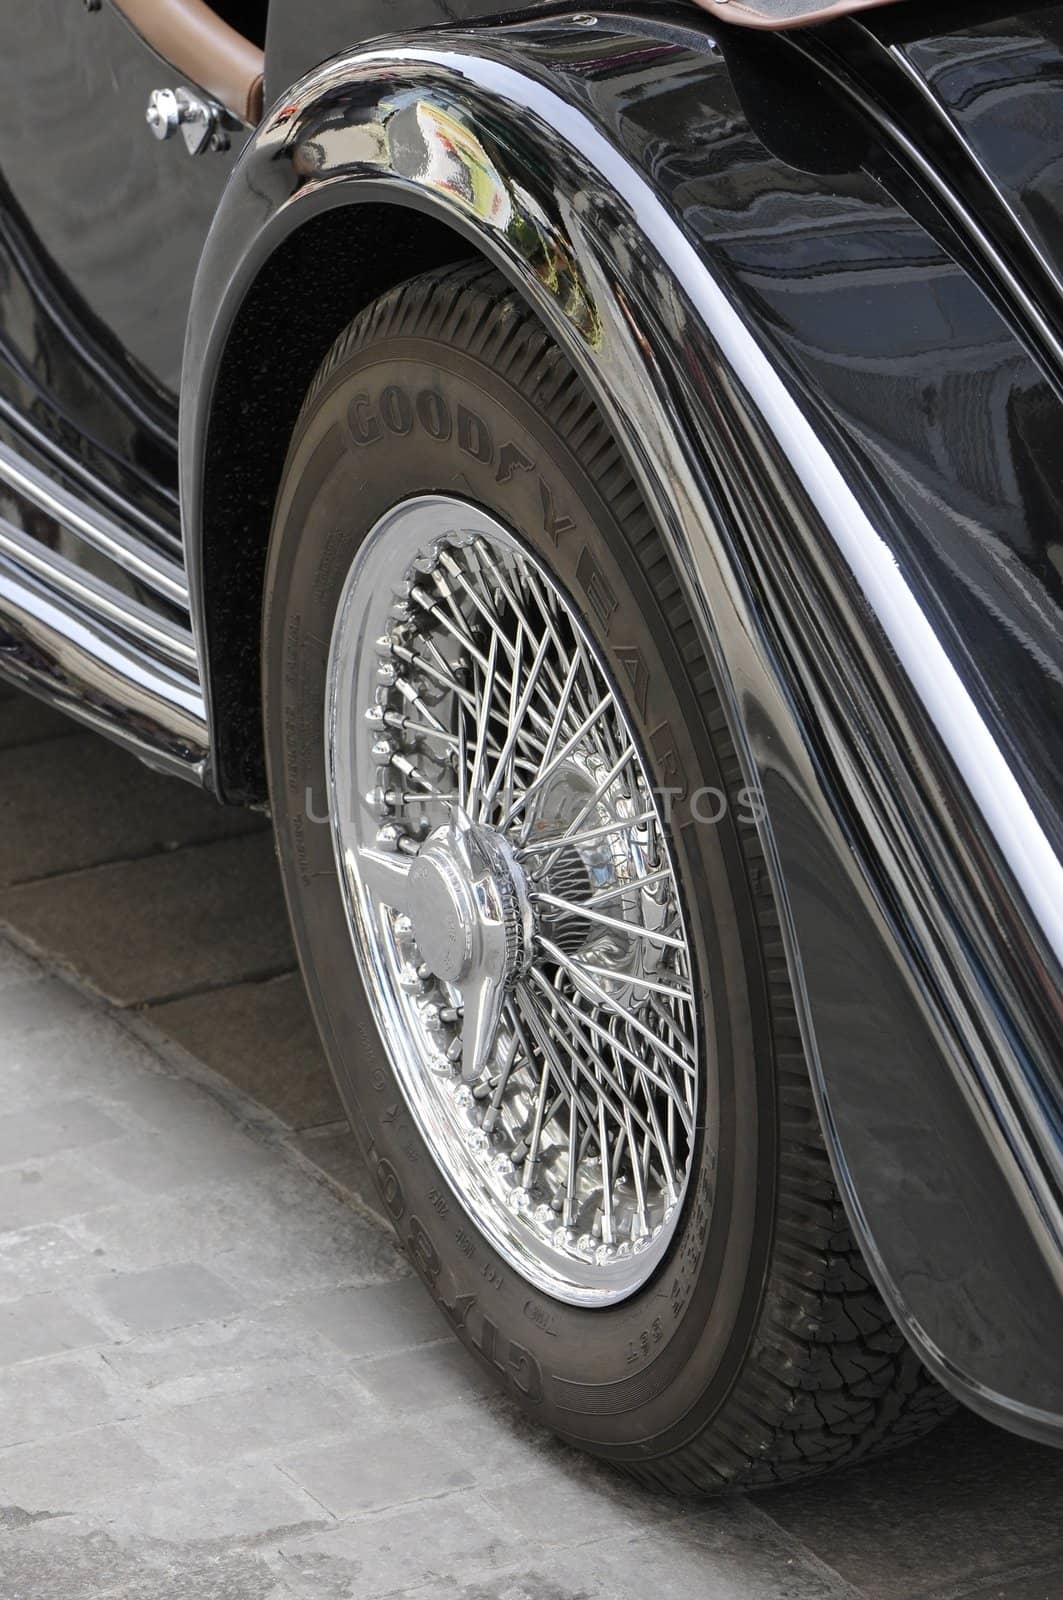 Chromed back wheel on a Morgan car by shkyo30